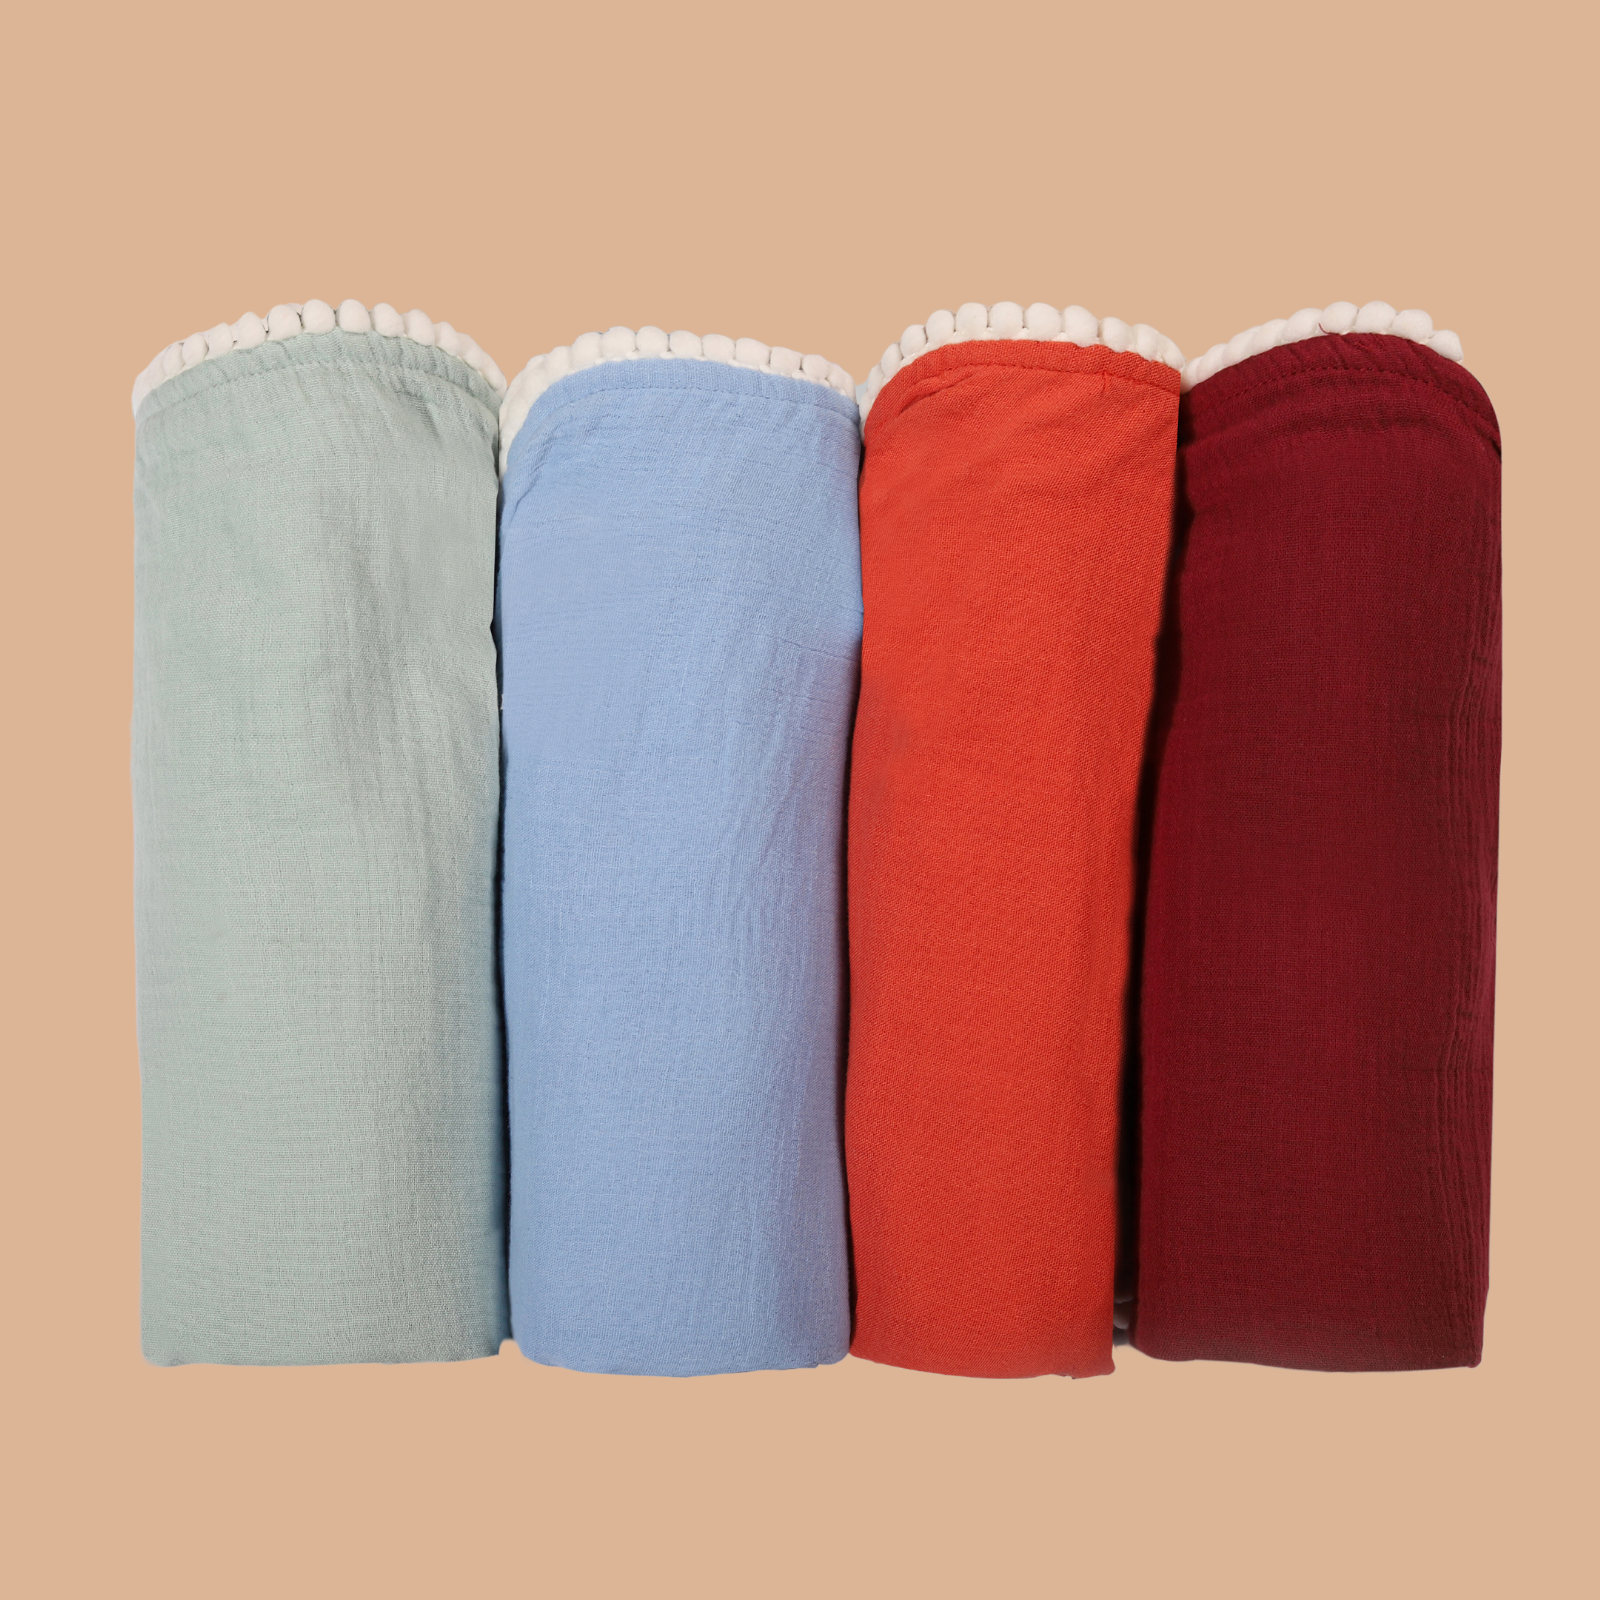 Greendeer 100% Crinkle Cotton Swaddle Cloth - Pack of 4